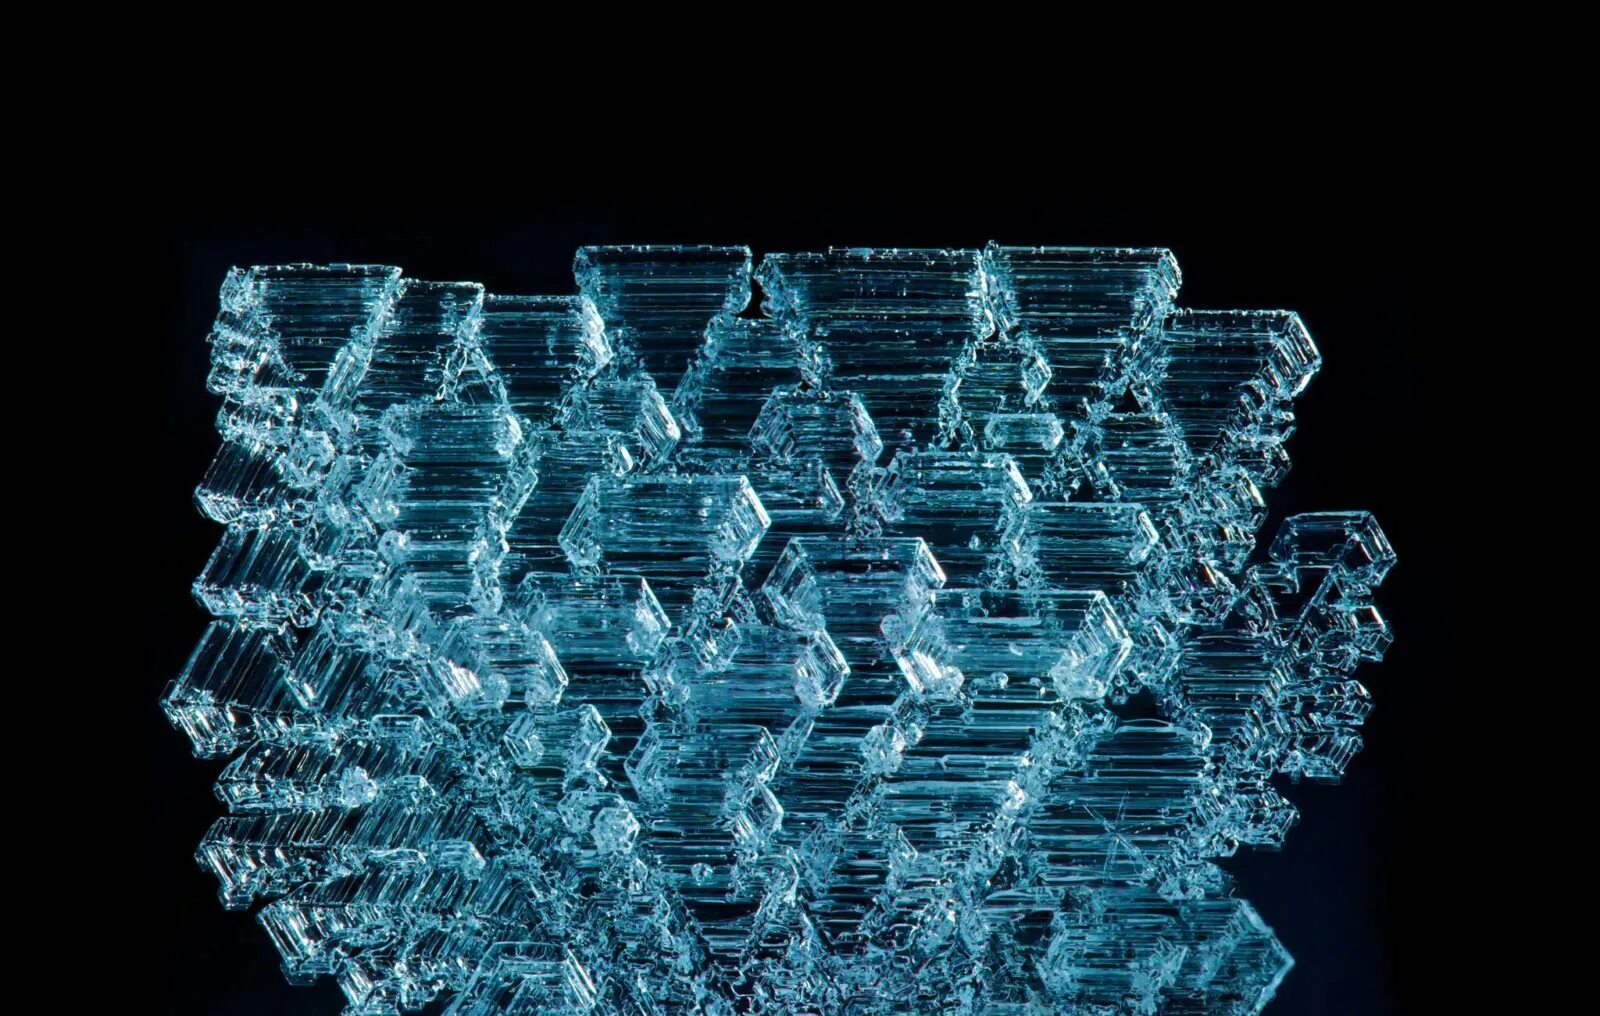 Кристаллы под микроскопом. Лед под микроскопом. Кристаллы льда под микроскопом. Кристаллики льда под микроскопом. Кристаллические инструменты